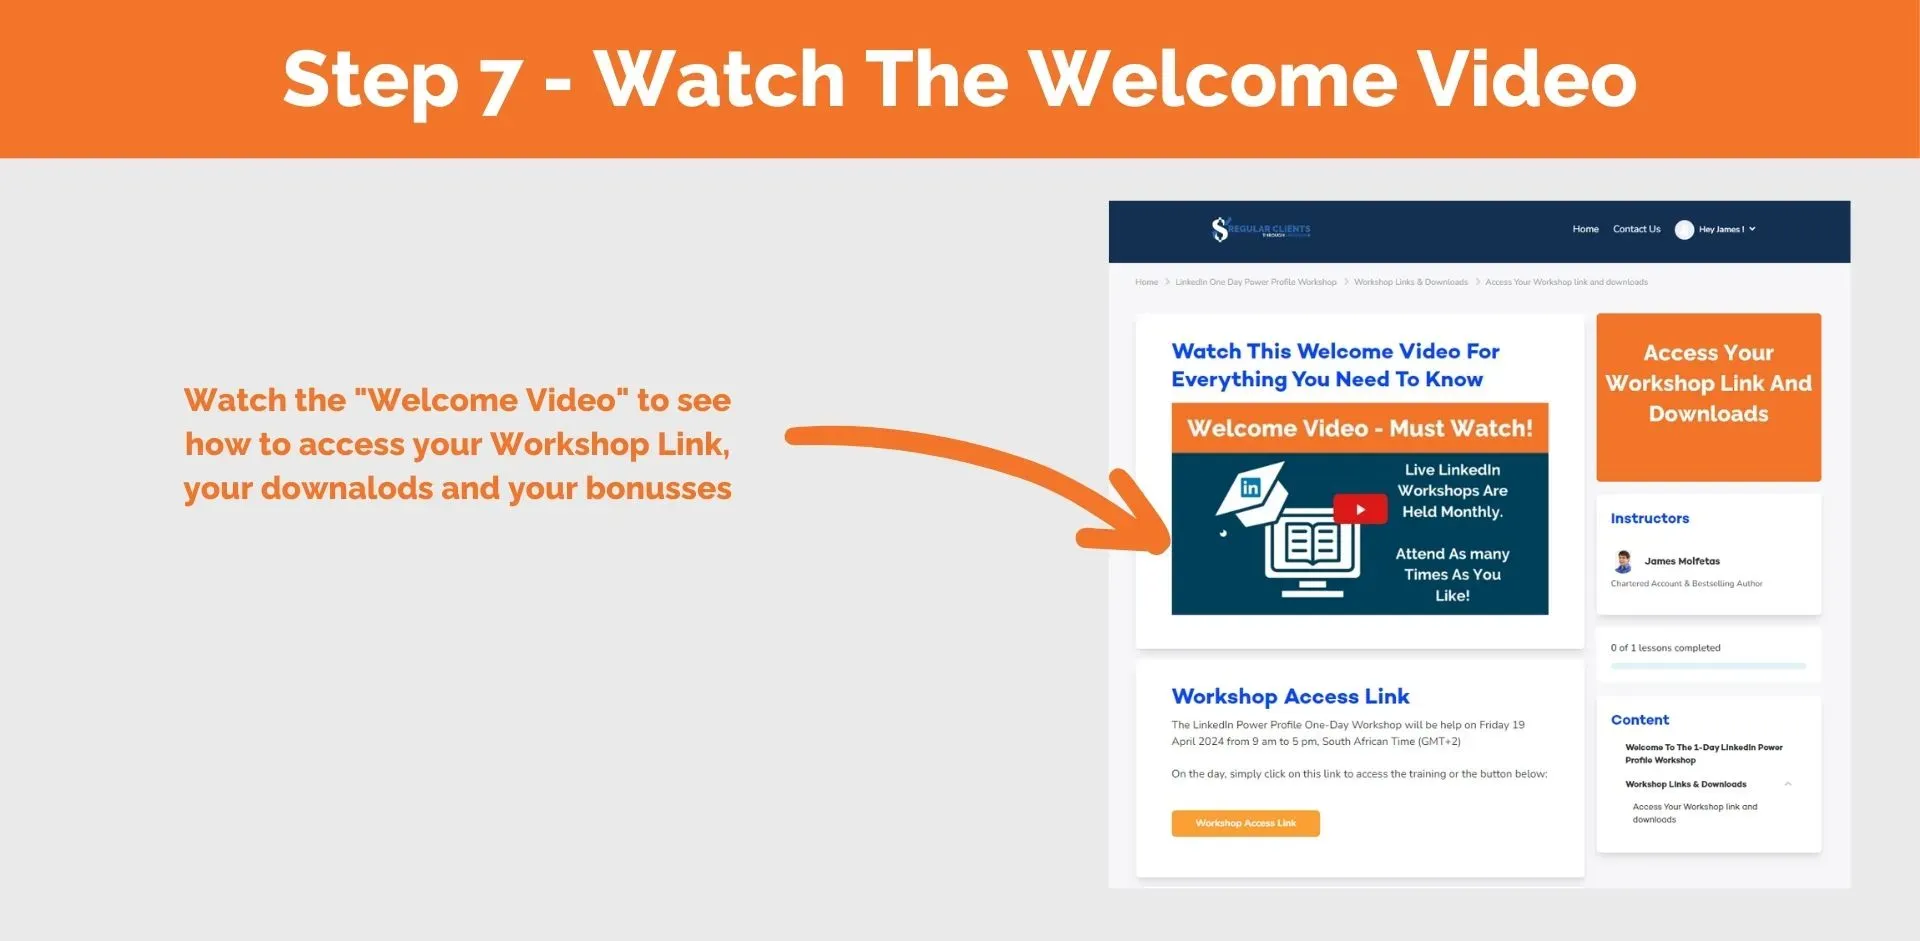 LinkedIn Power Profile Workshop Welcome Video